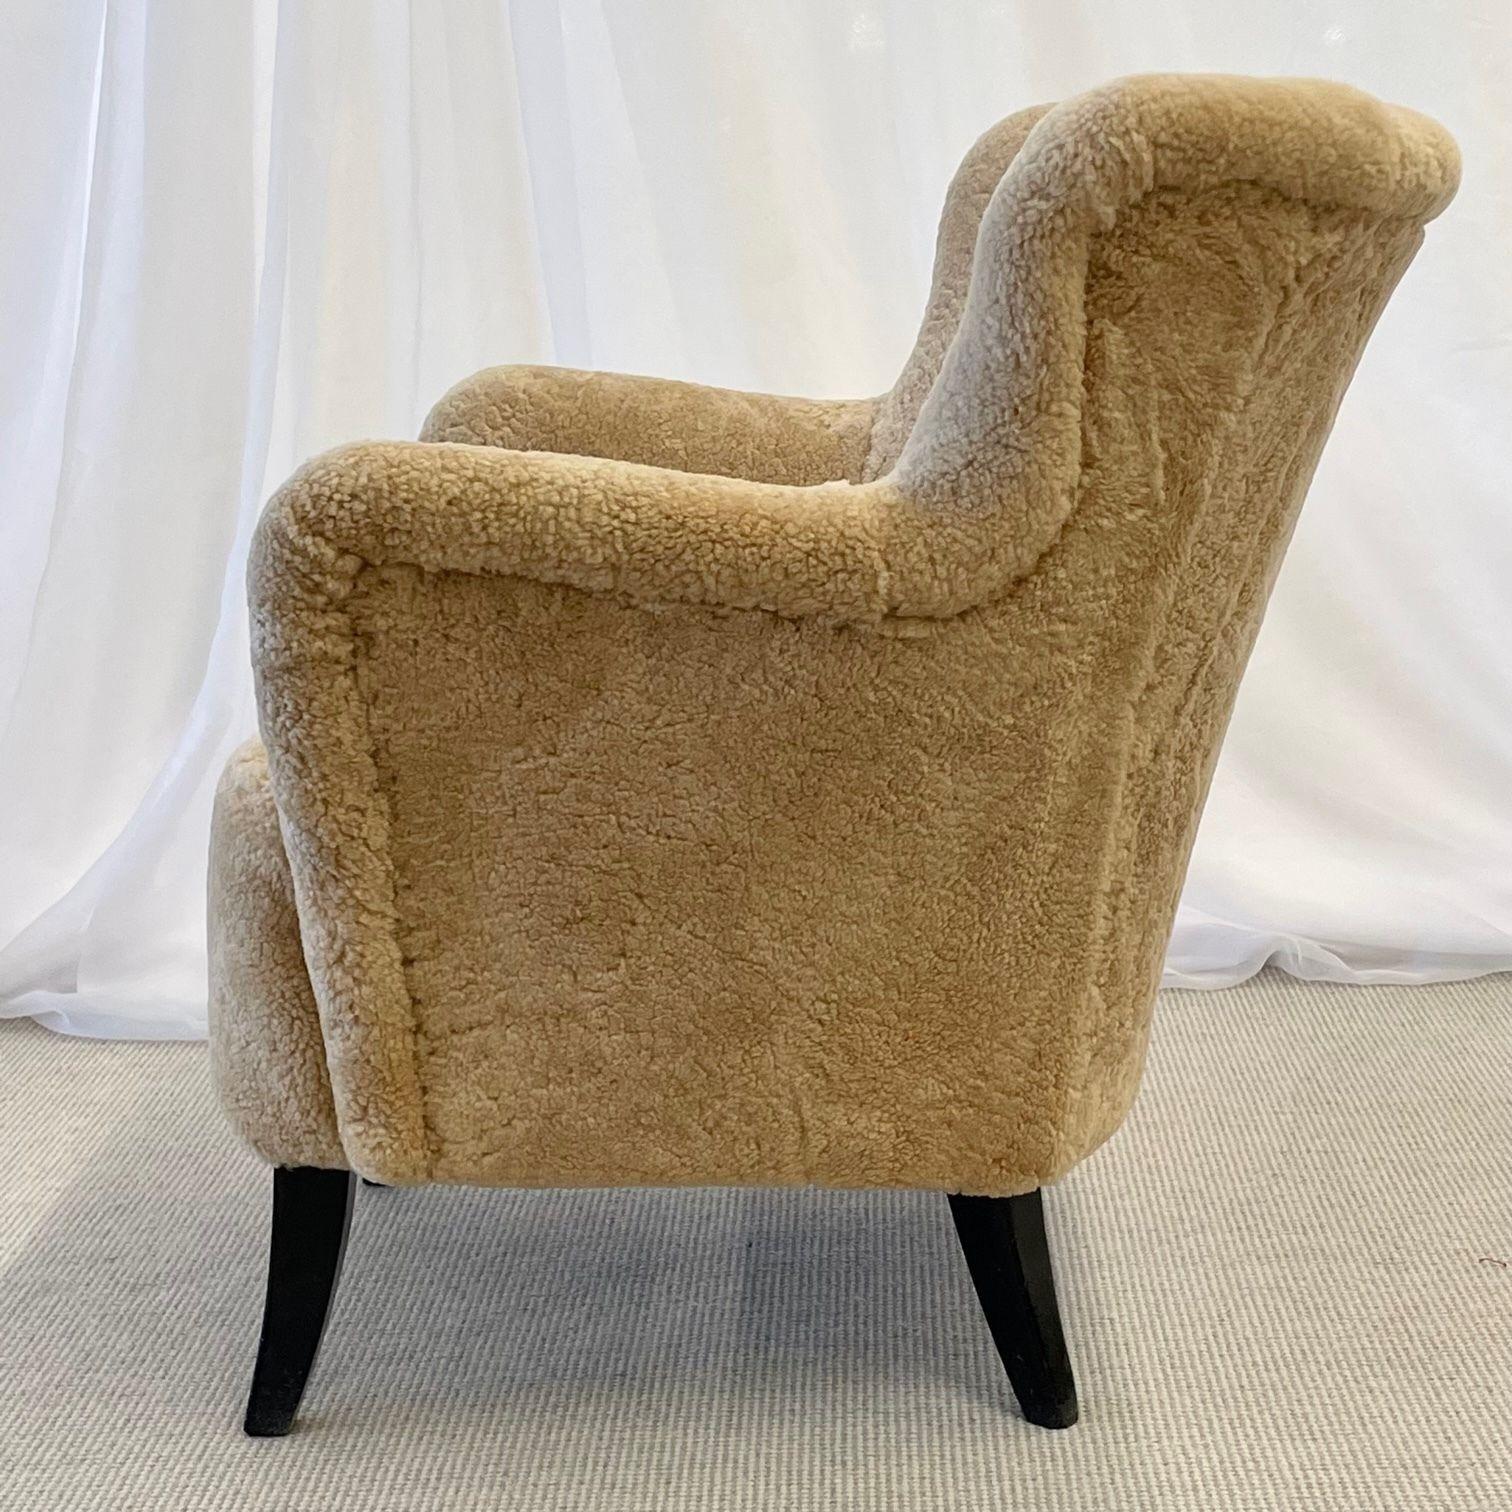 Danish Mid-Century Modern, Lounge Chairs, Sheepskin, Ebonized Wood, 1950s For Sale 6